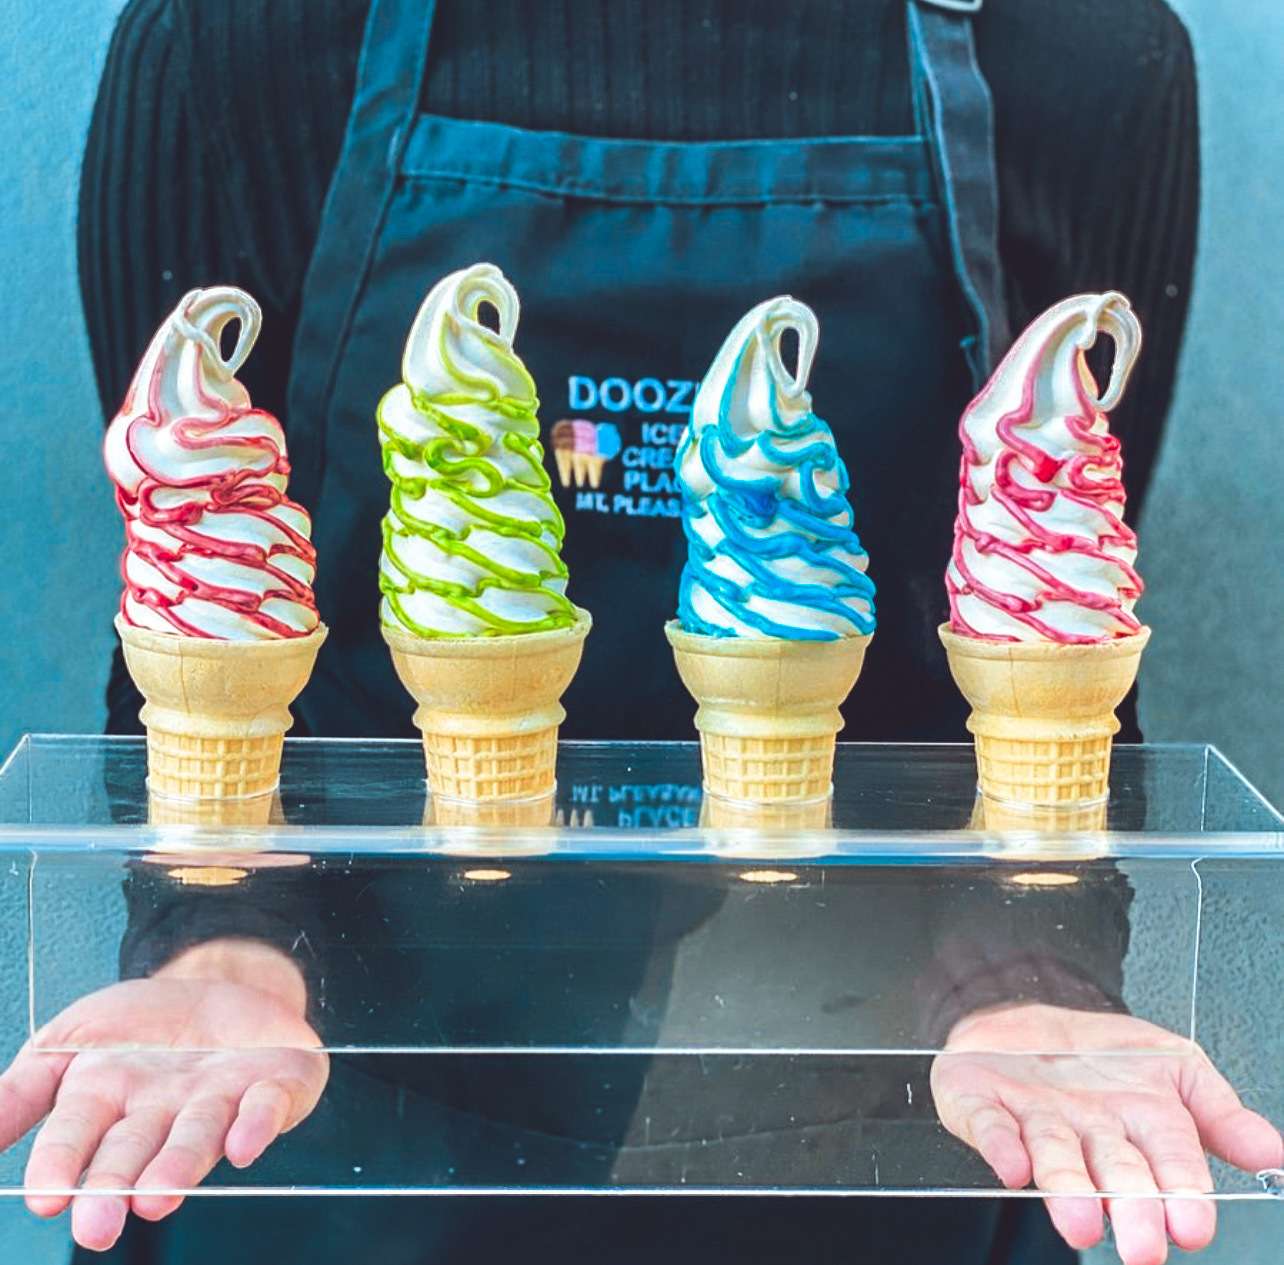 ice cream shop worker with four ice cream cones from Flavor Burst equipment